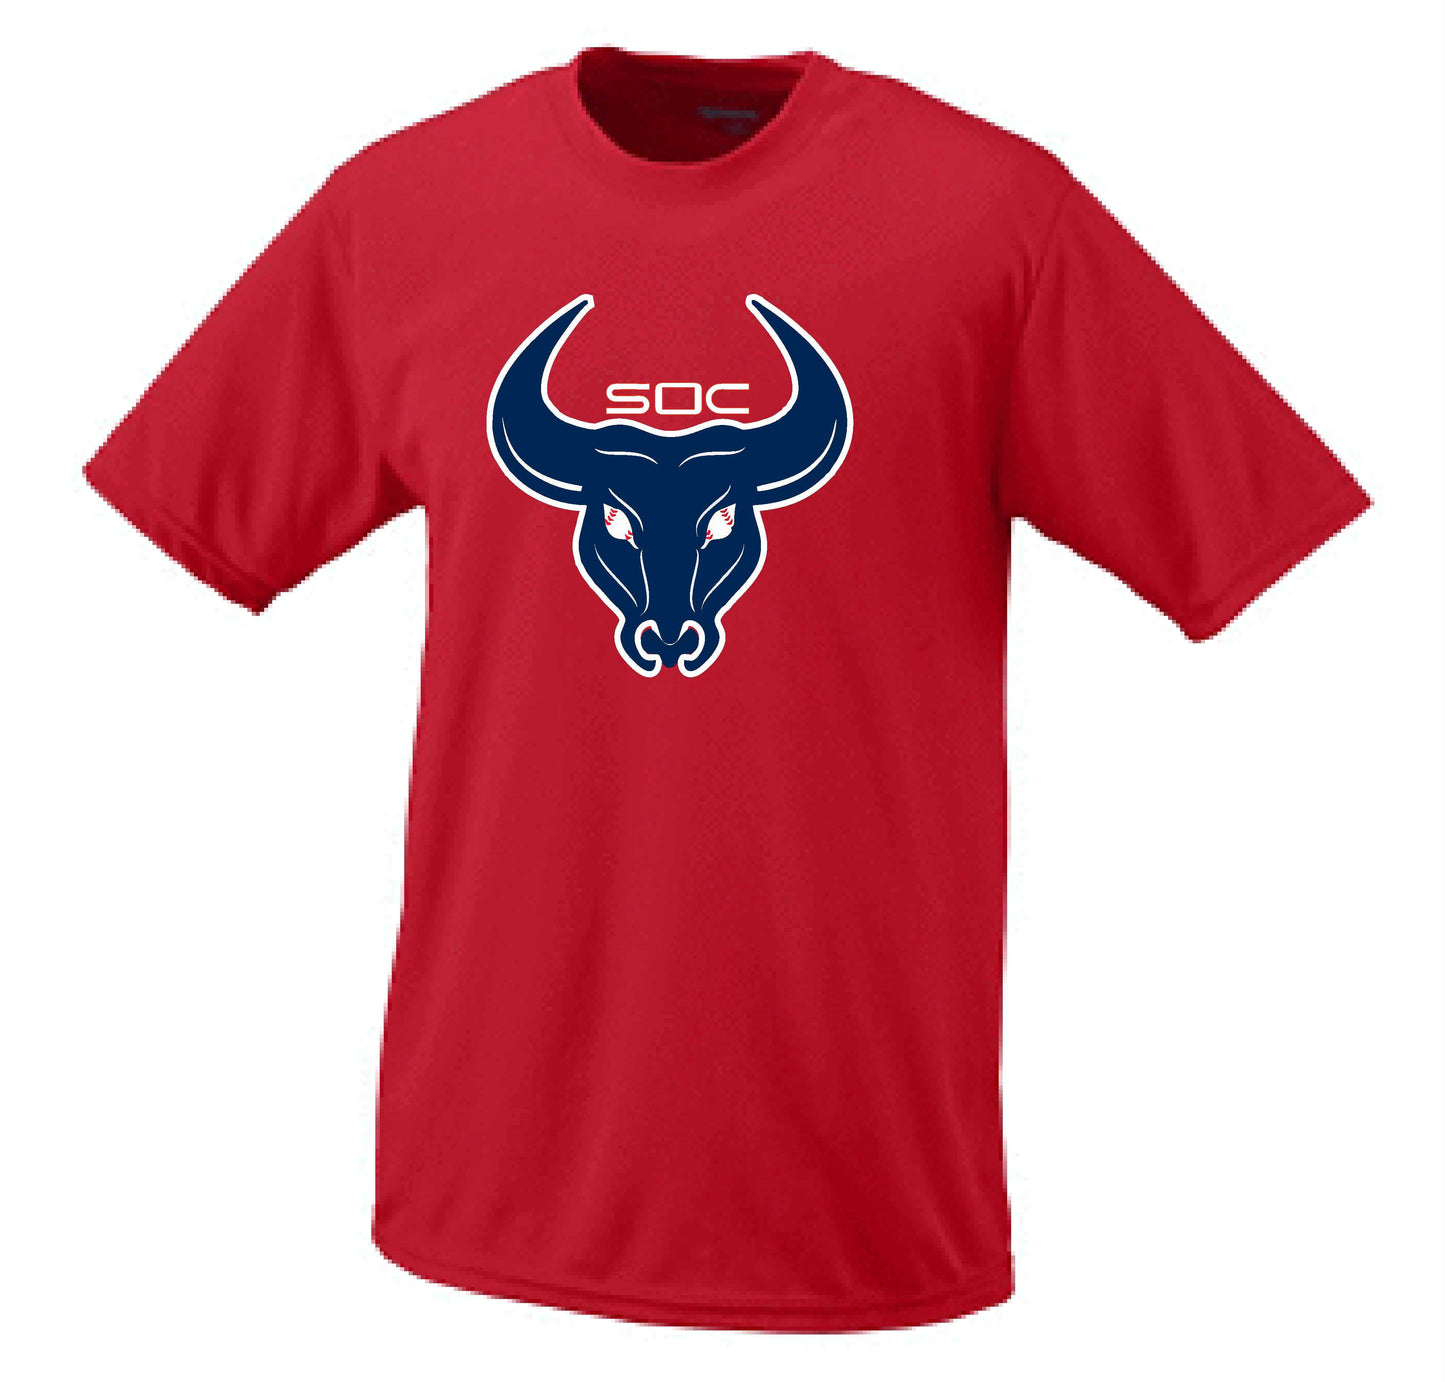 SC "Bull logo" Cotton T-shirt